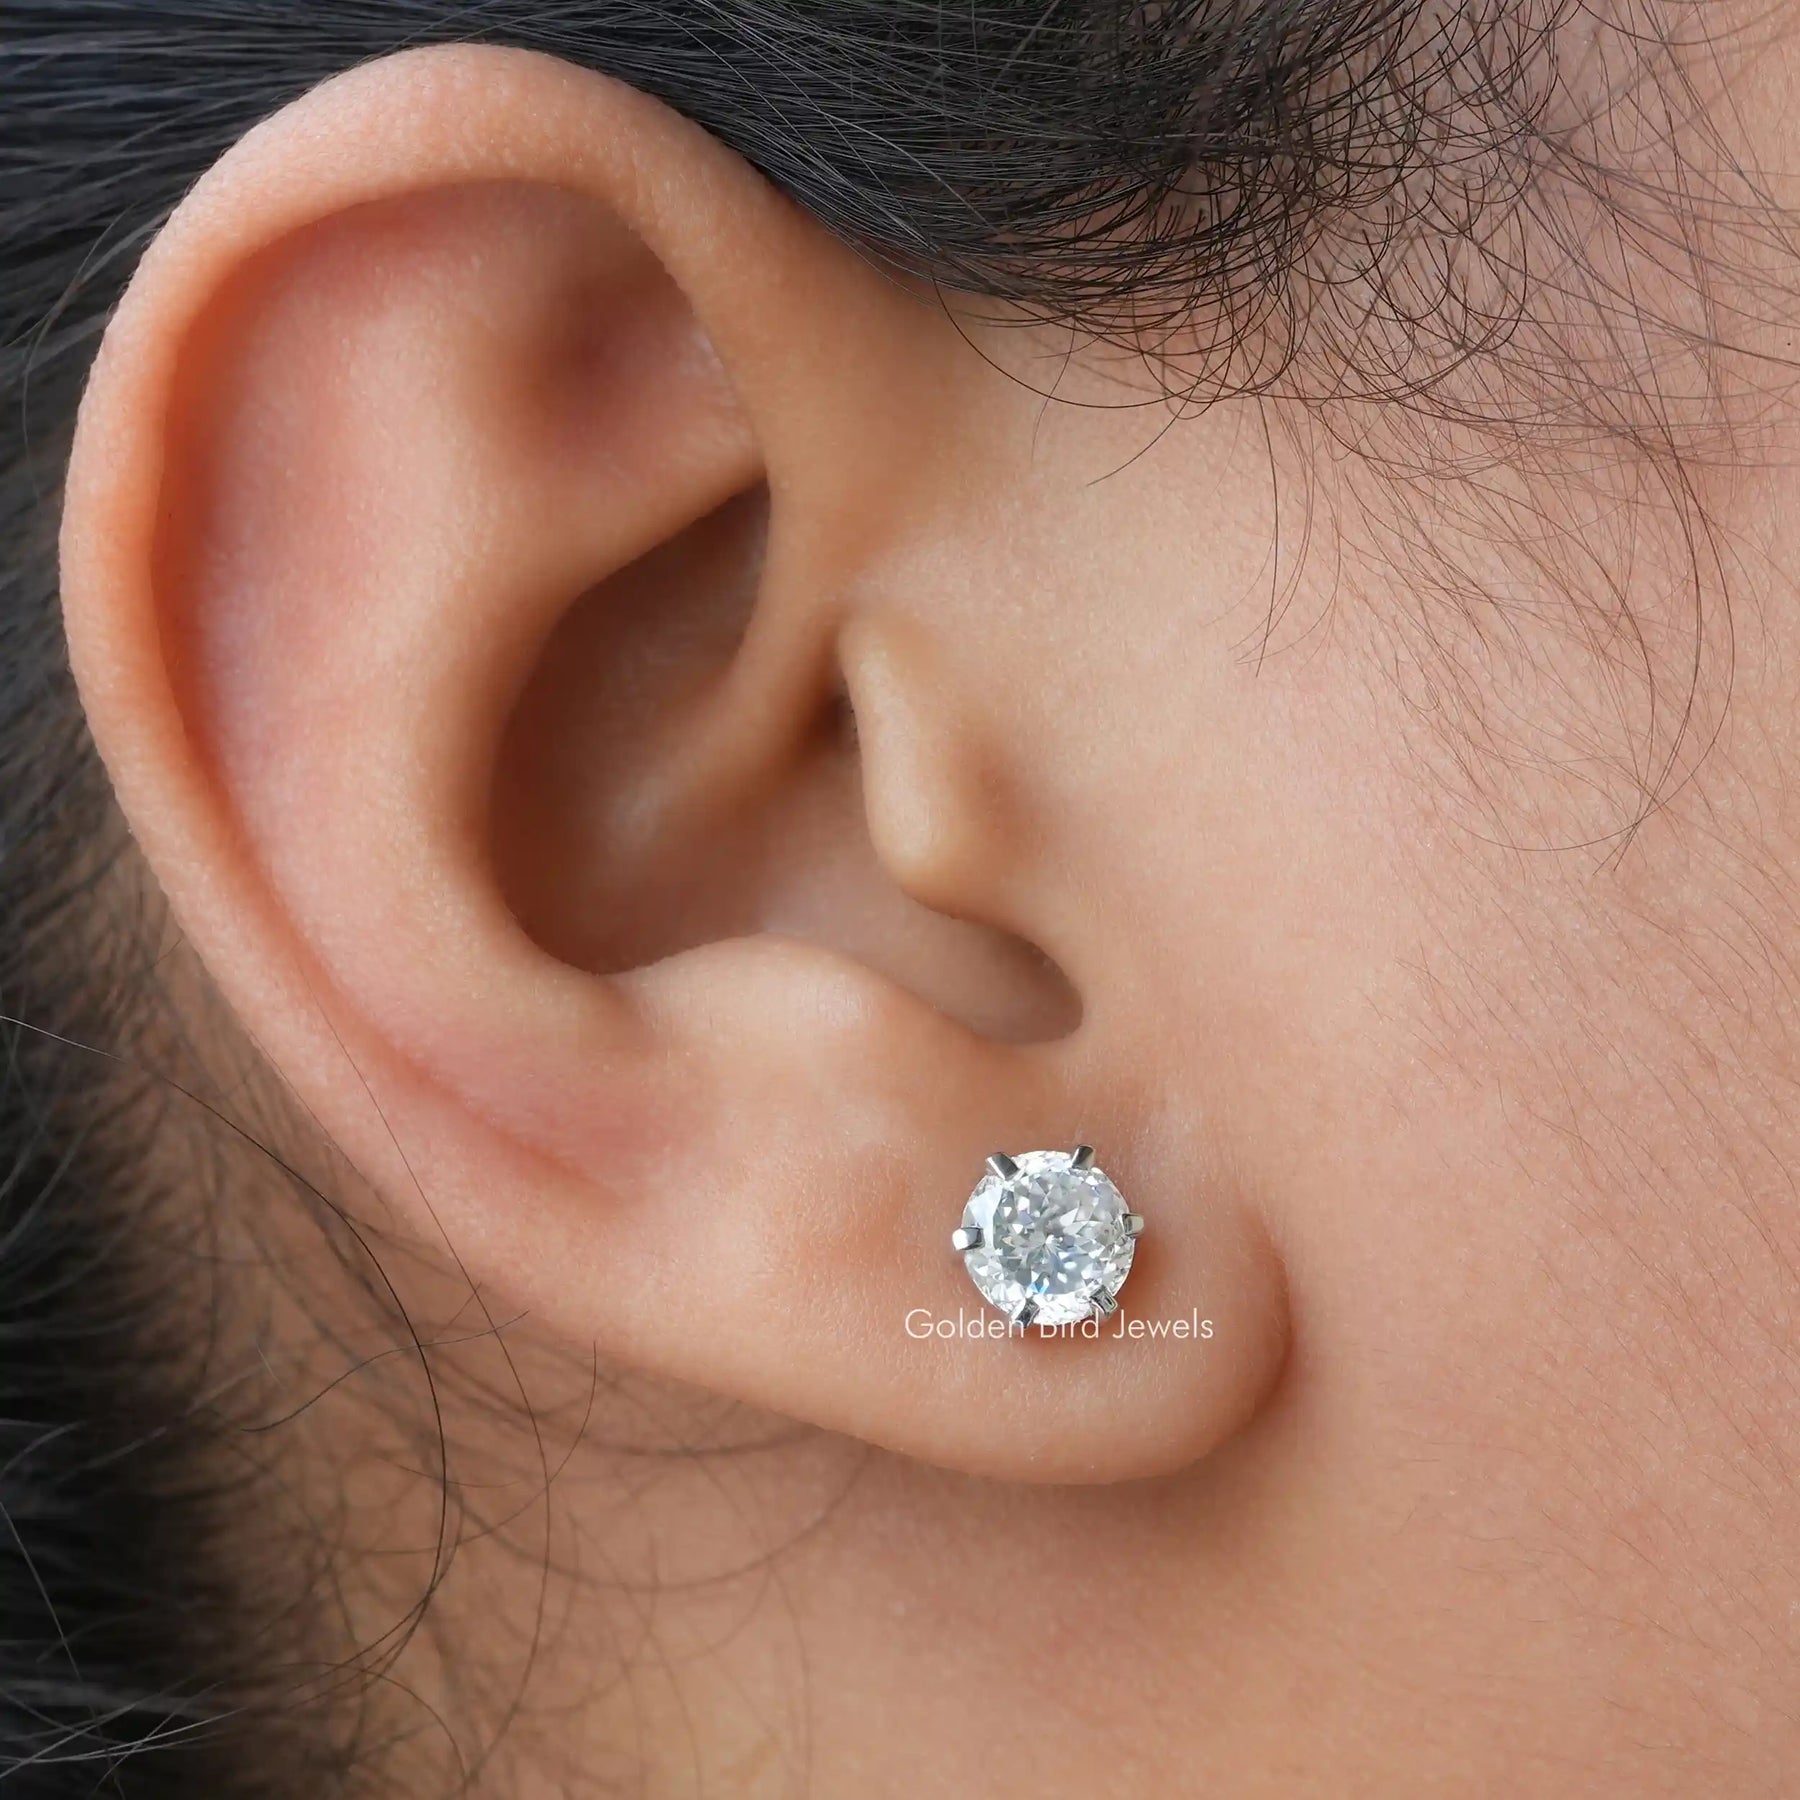 [In ear front view portuguese cut stud earrings made of vvs clarity]-[Golden Bird Jewels]